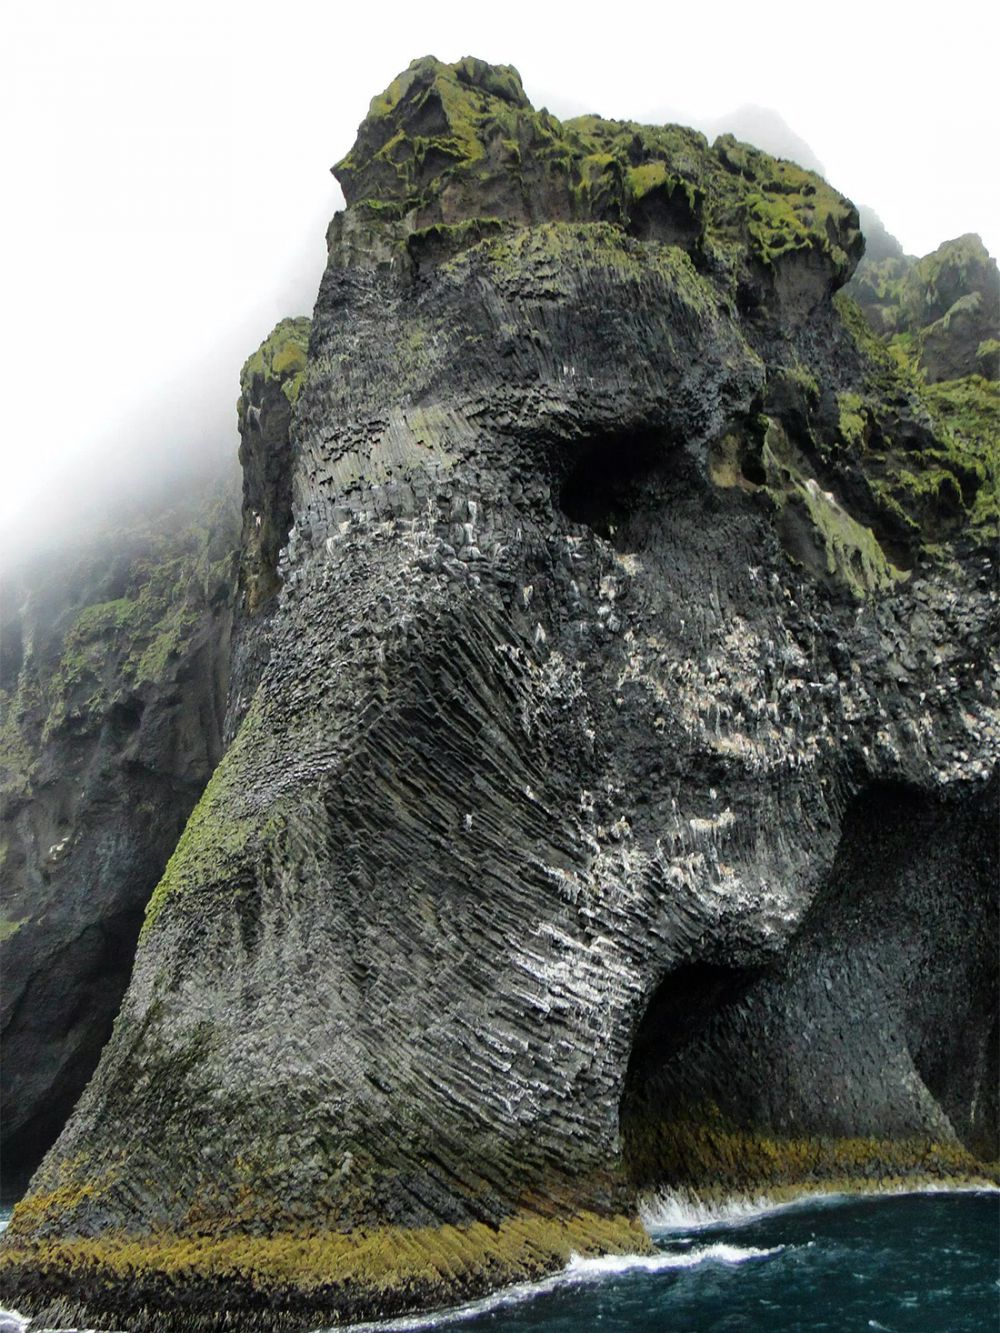 Patung kepala gajah ini terbentuk secara alami di perbukitan Islandia